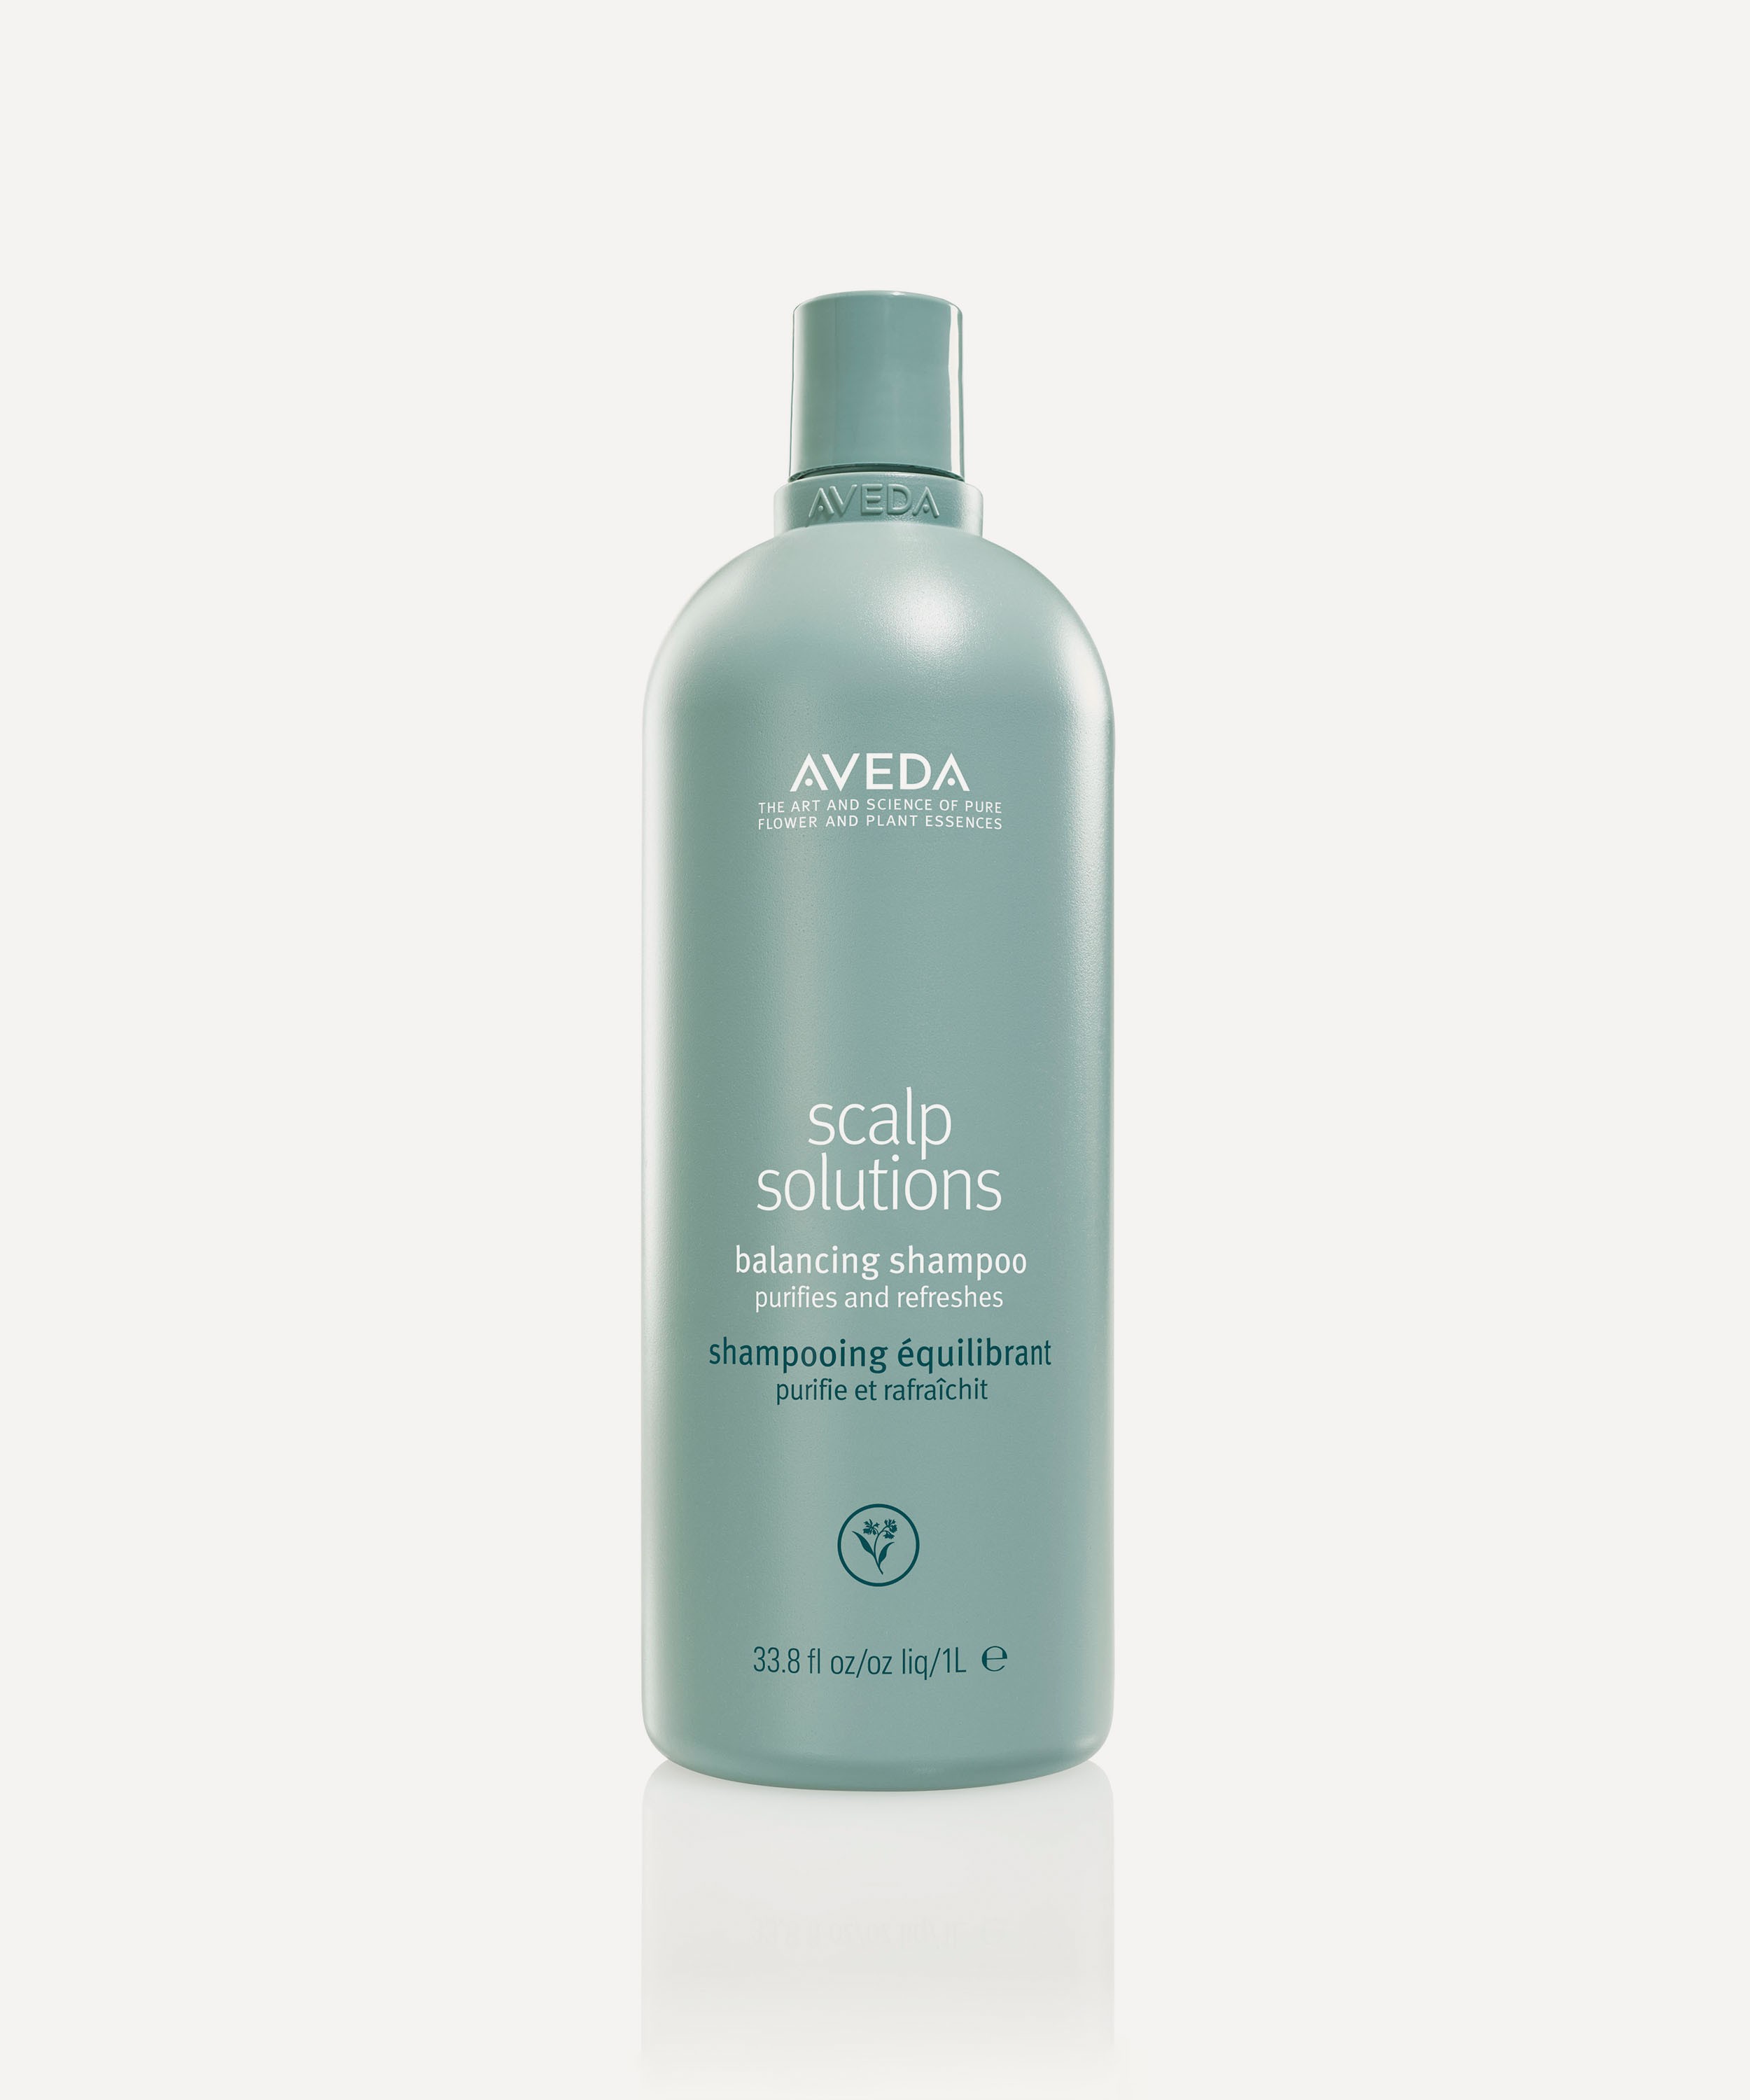 Aveda - Scalp Solutions Balancing Shampoo 1L